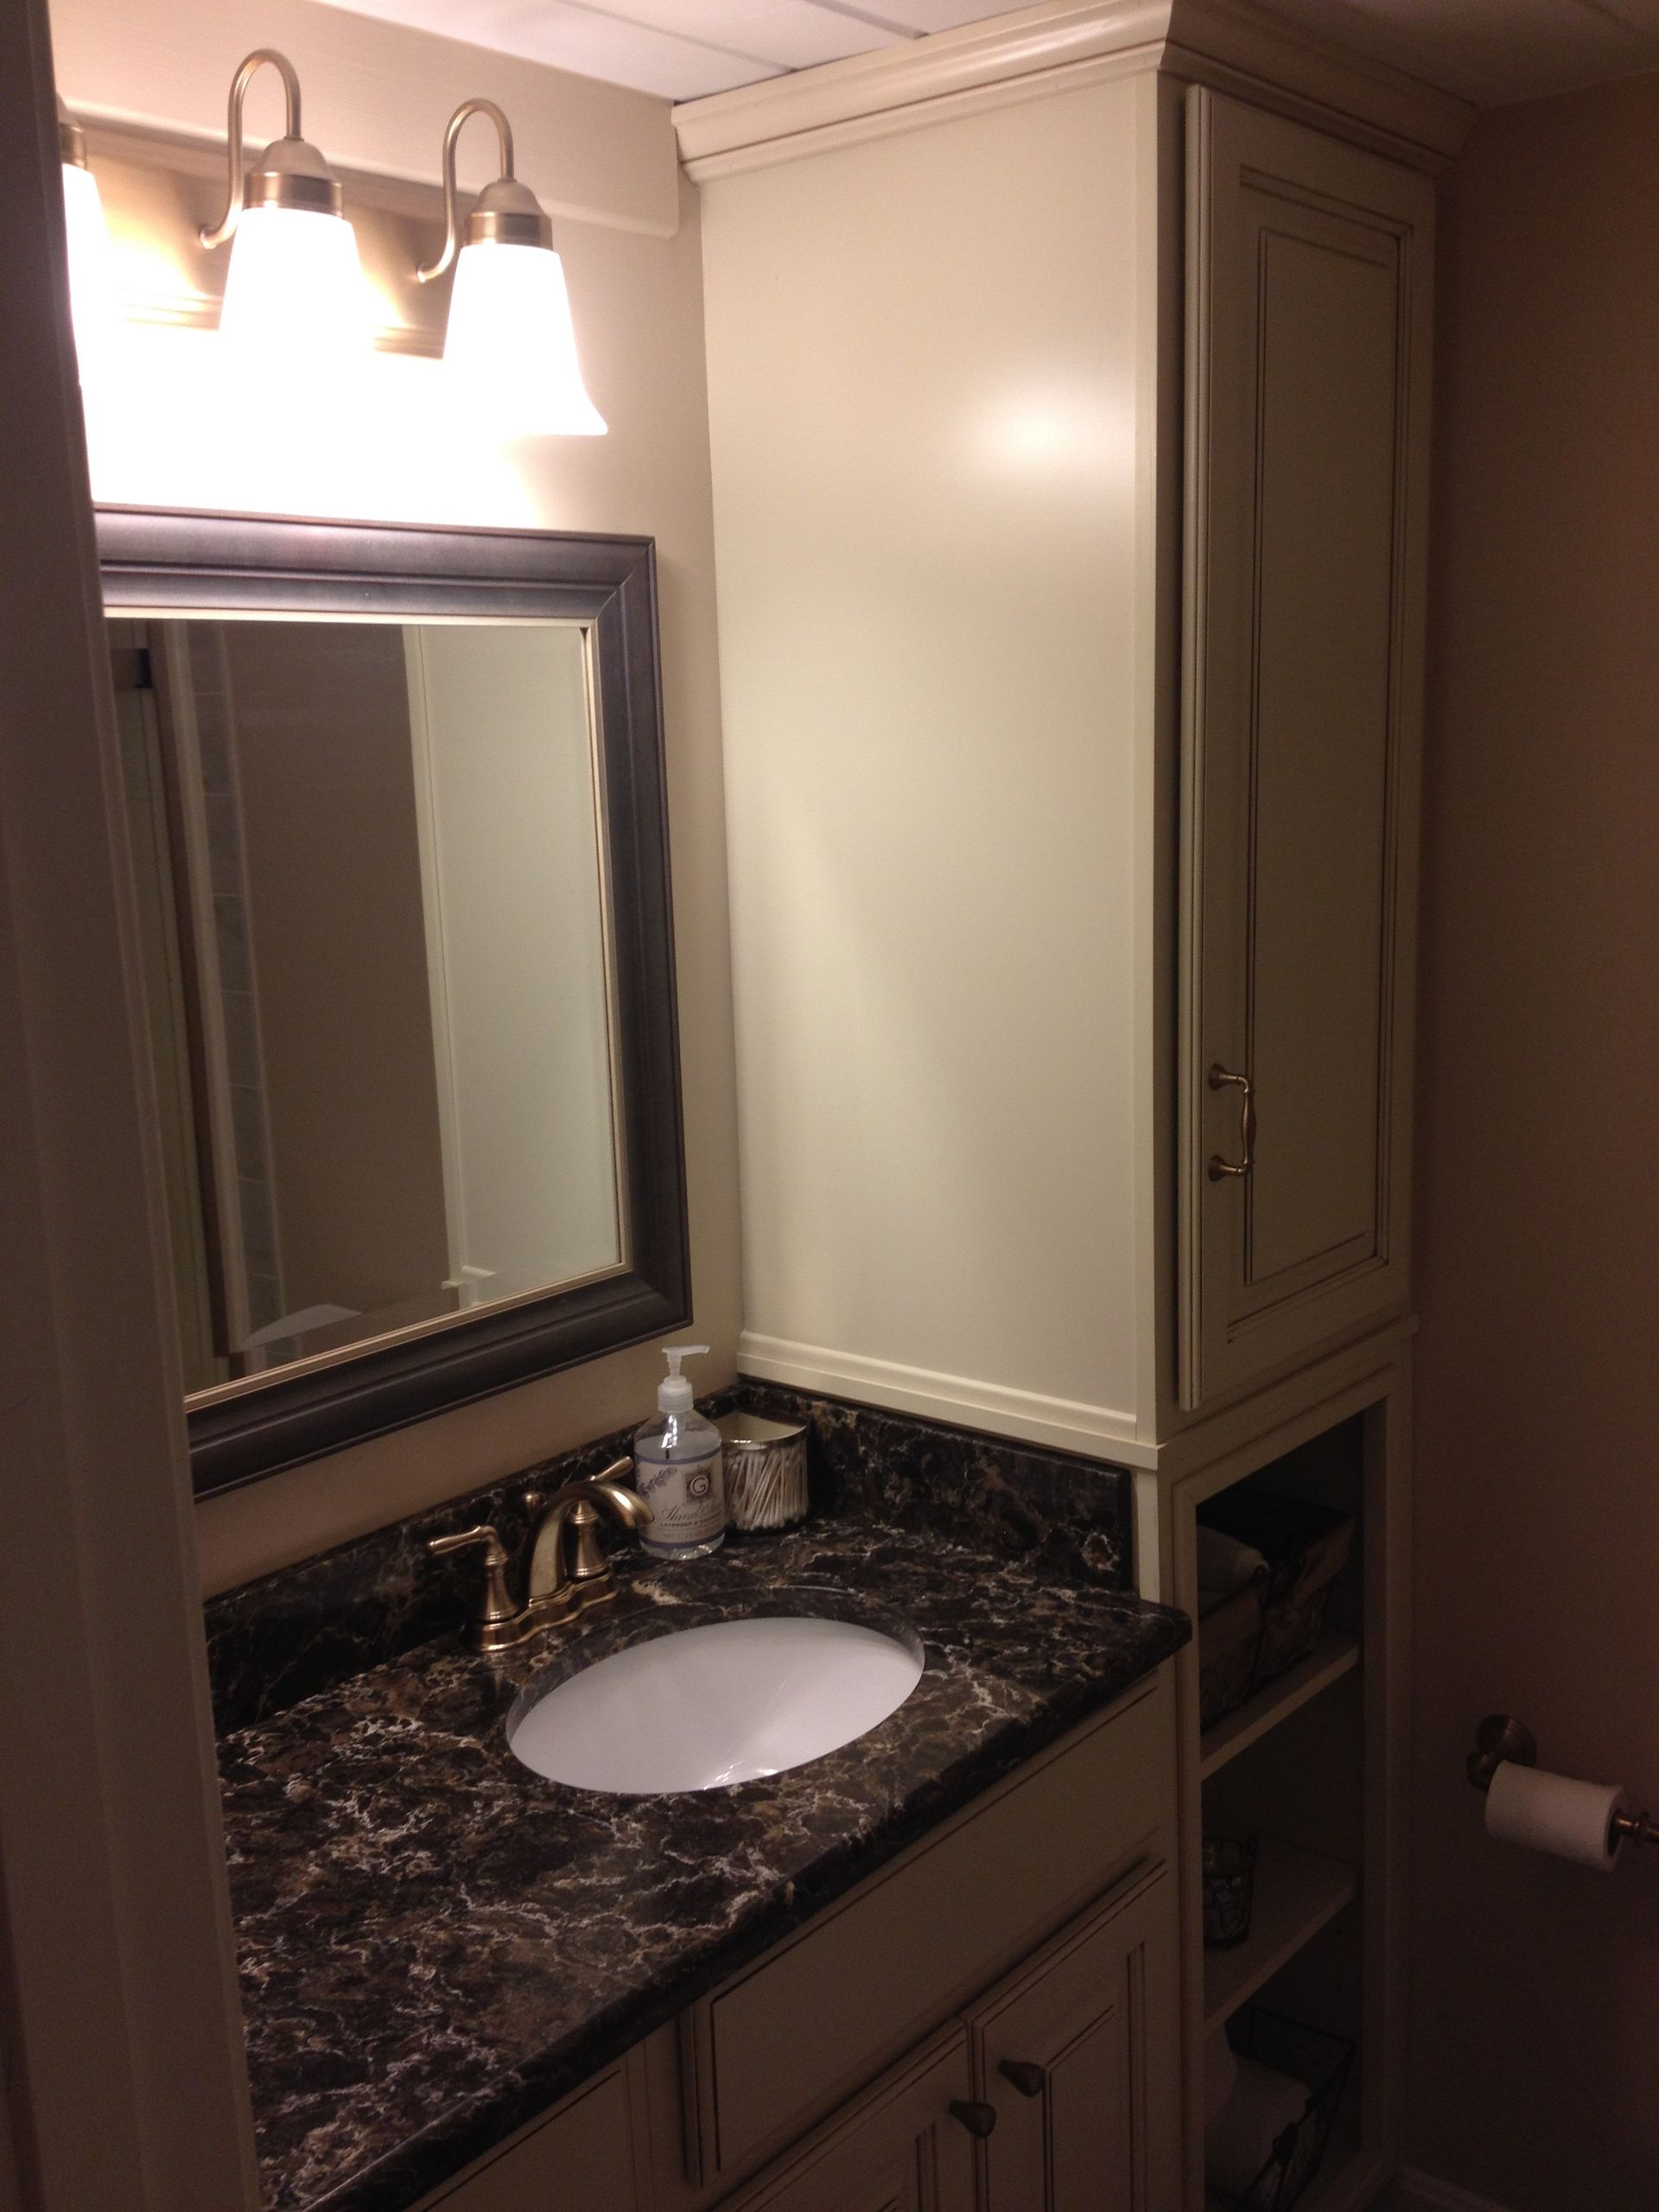 LAV Bathroom Remodel Smithfield 2013 2 2448x3264 1920w.JPG